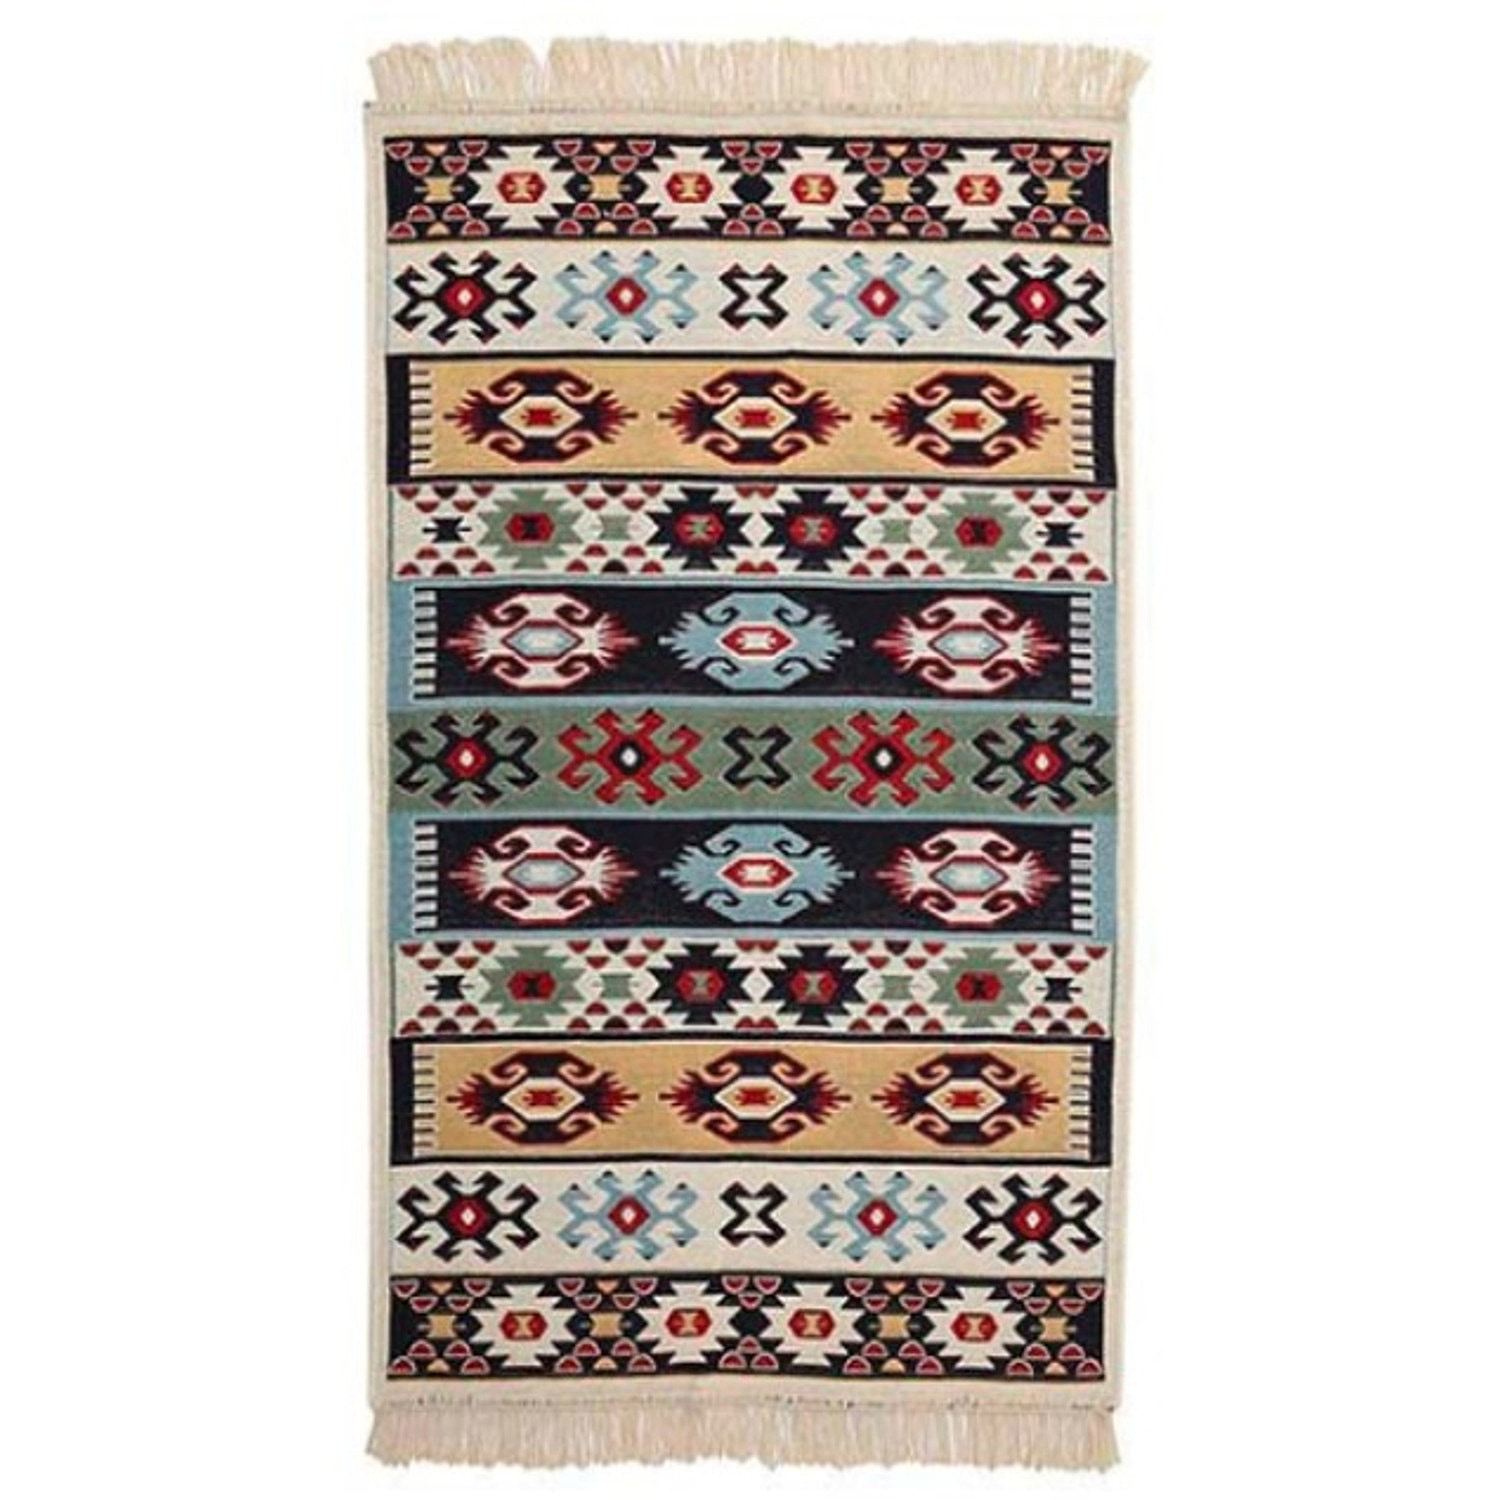 Turkish-Authentic-Traditional-Machine-Made-Kilim-Rugs-Size-120x80-cm-M